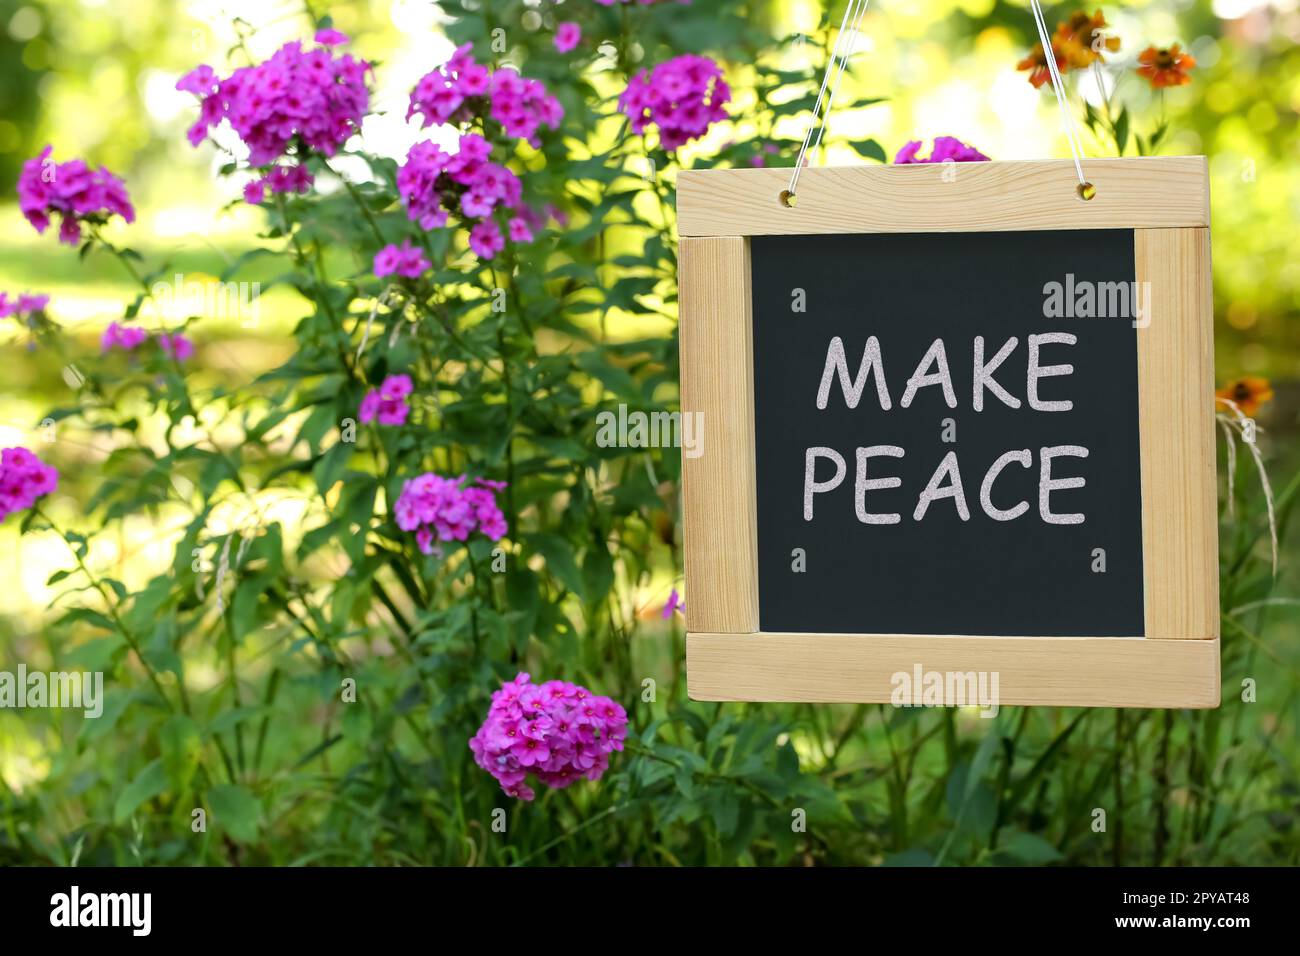 Chalkboard with phrase Make Peace near phlox flowers outdoors Stock Photo